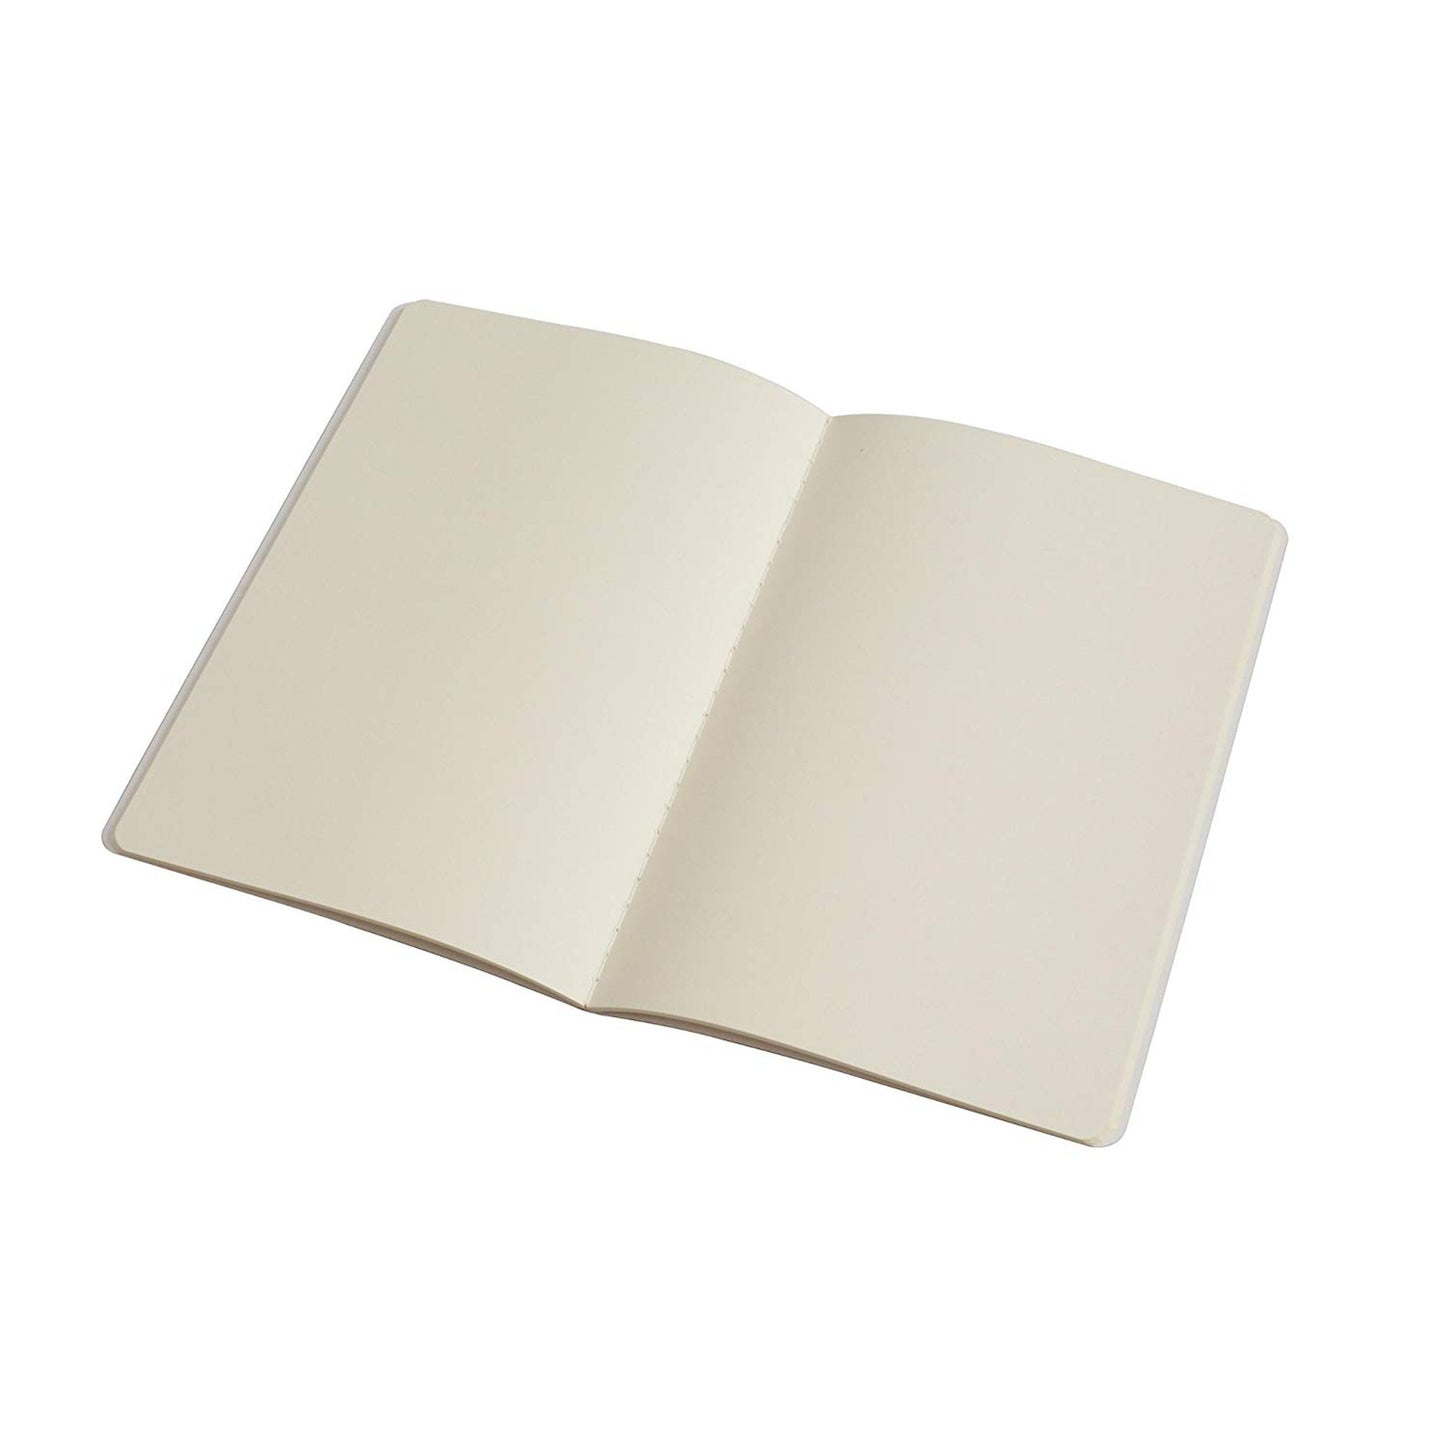 PinkPolish Design Notebook "Saturn Planet Pop" Notebook / Sketchbook / Journal